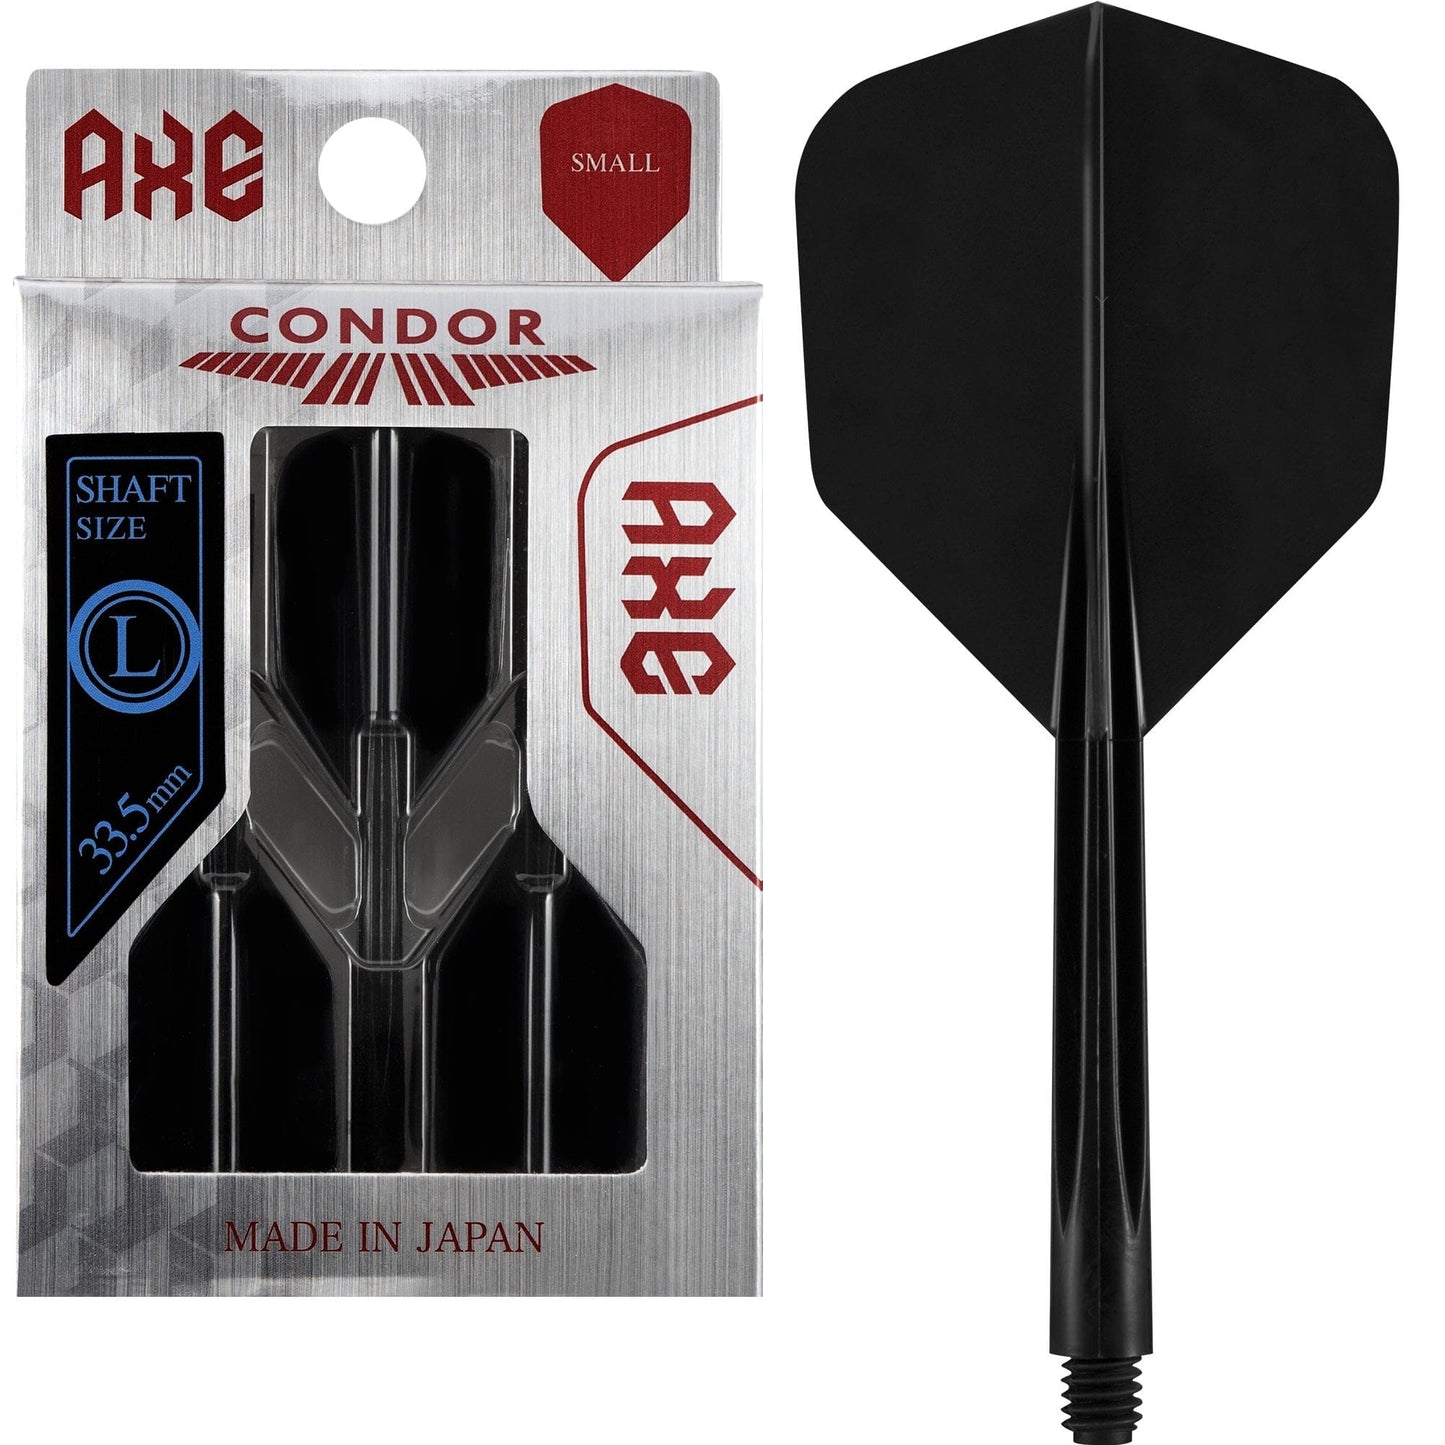 Condor AXE Dart Flights - Small - Black Long